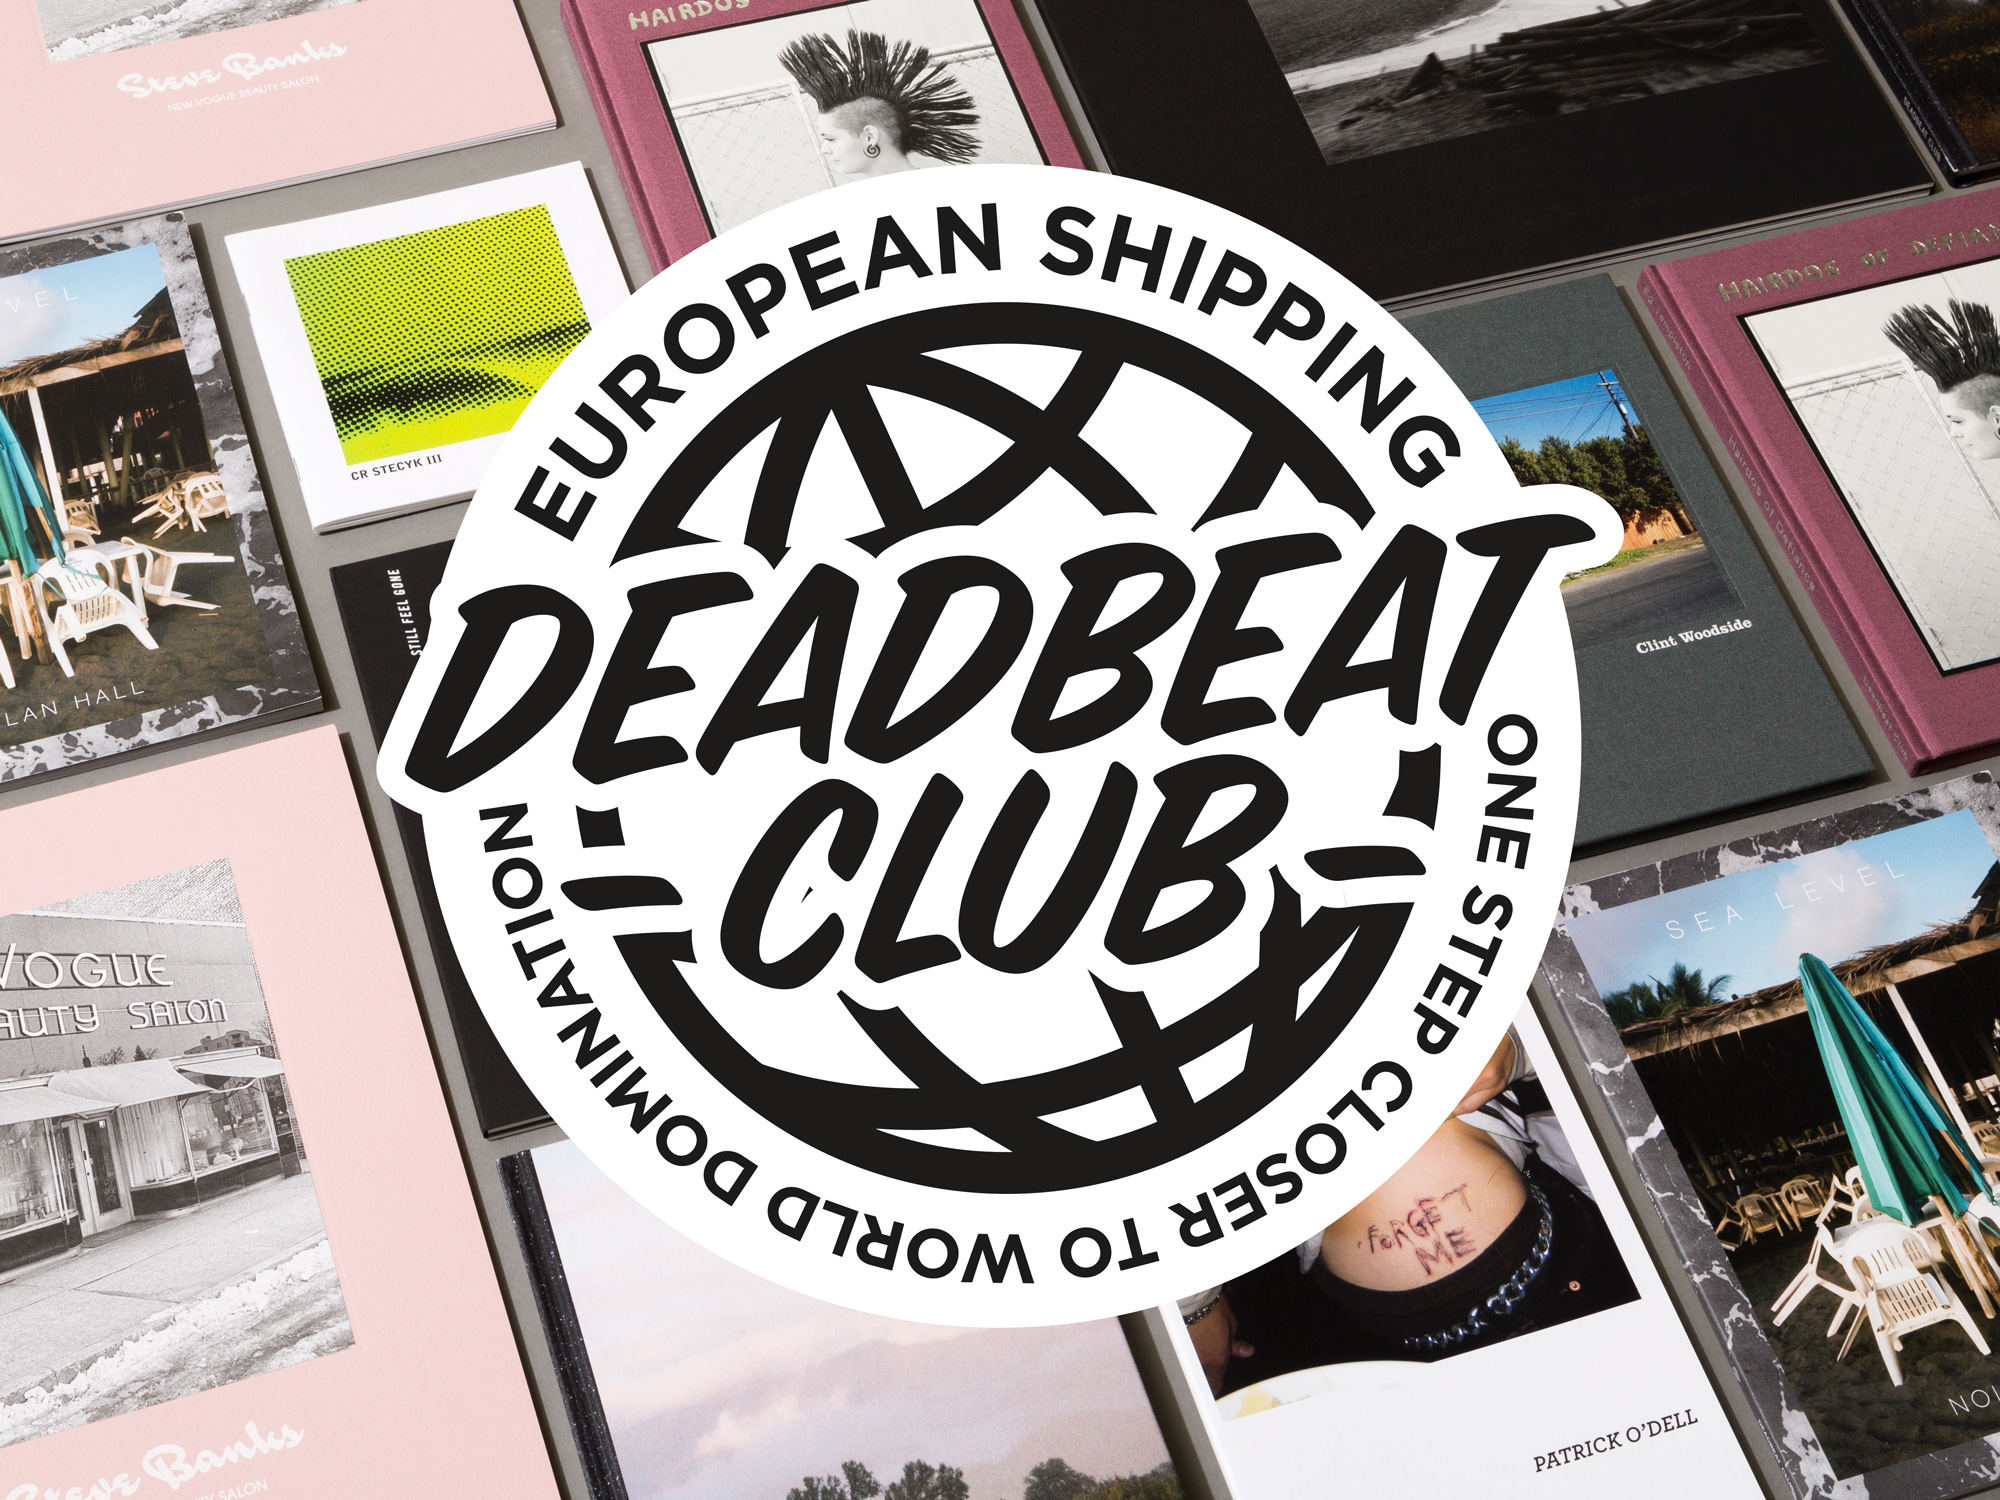 Deadbeat Club Europe!